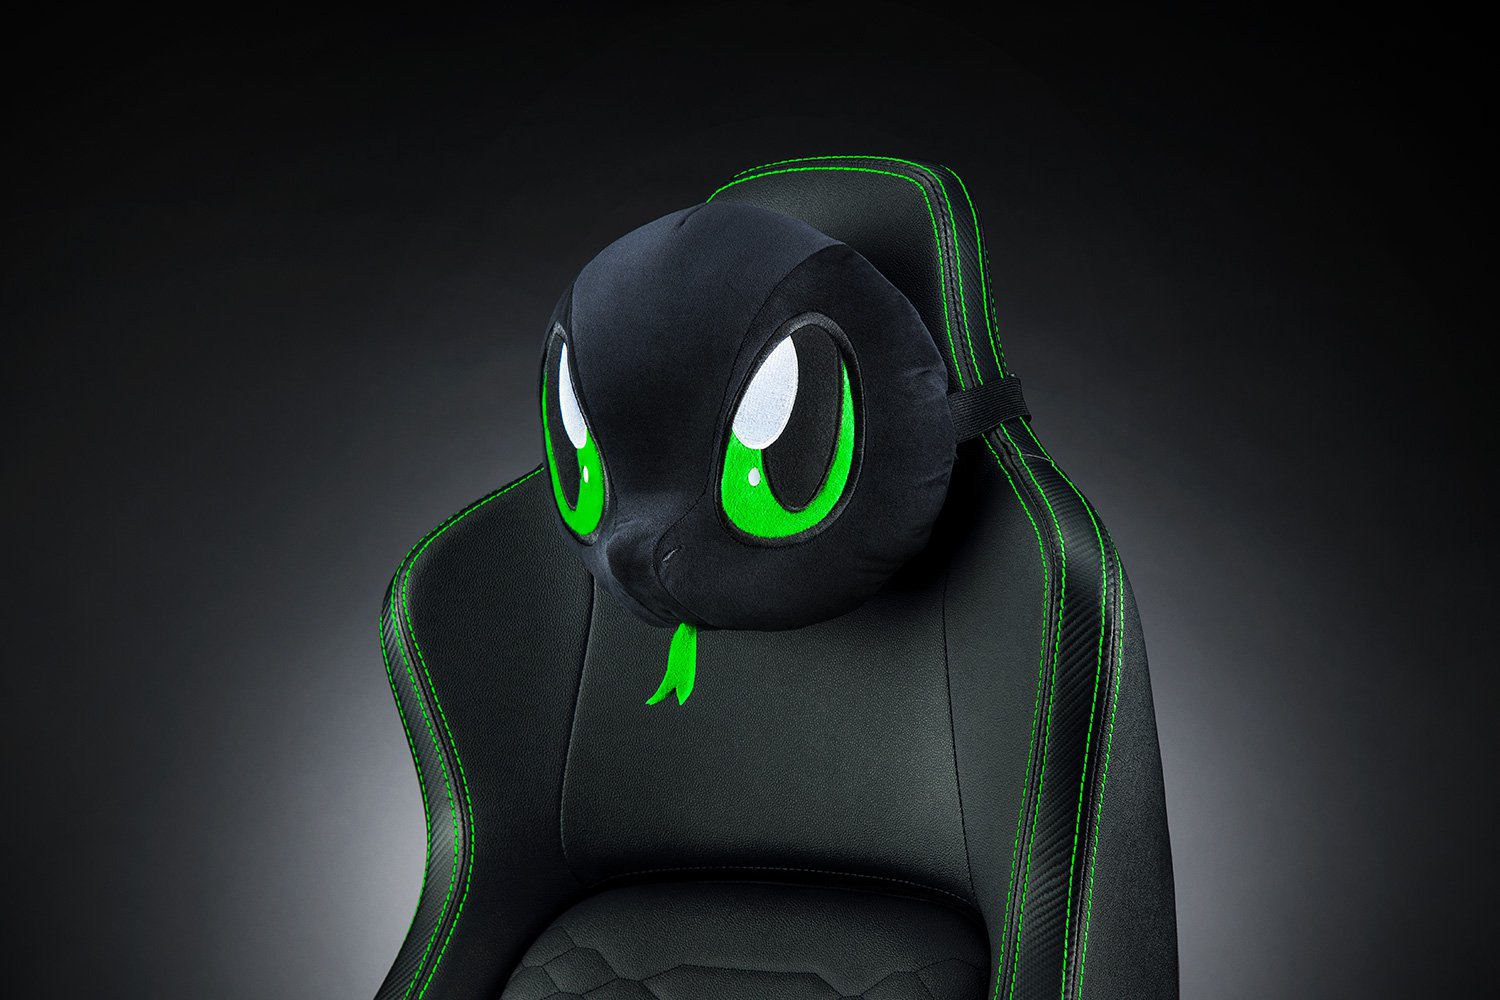 Razer Sneki Snek head pillow on a gaming chair on a black background